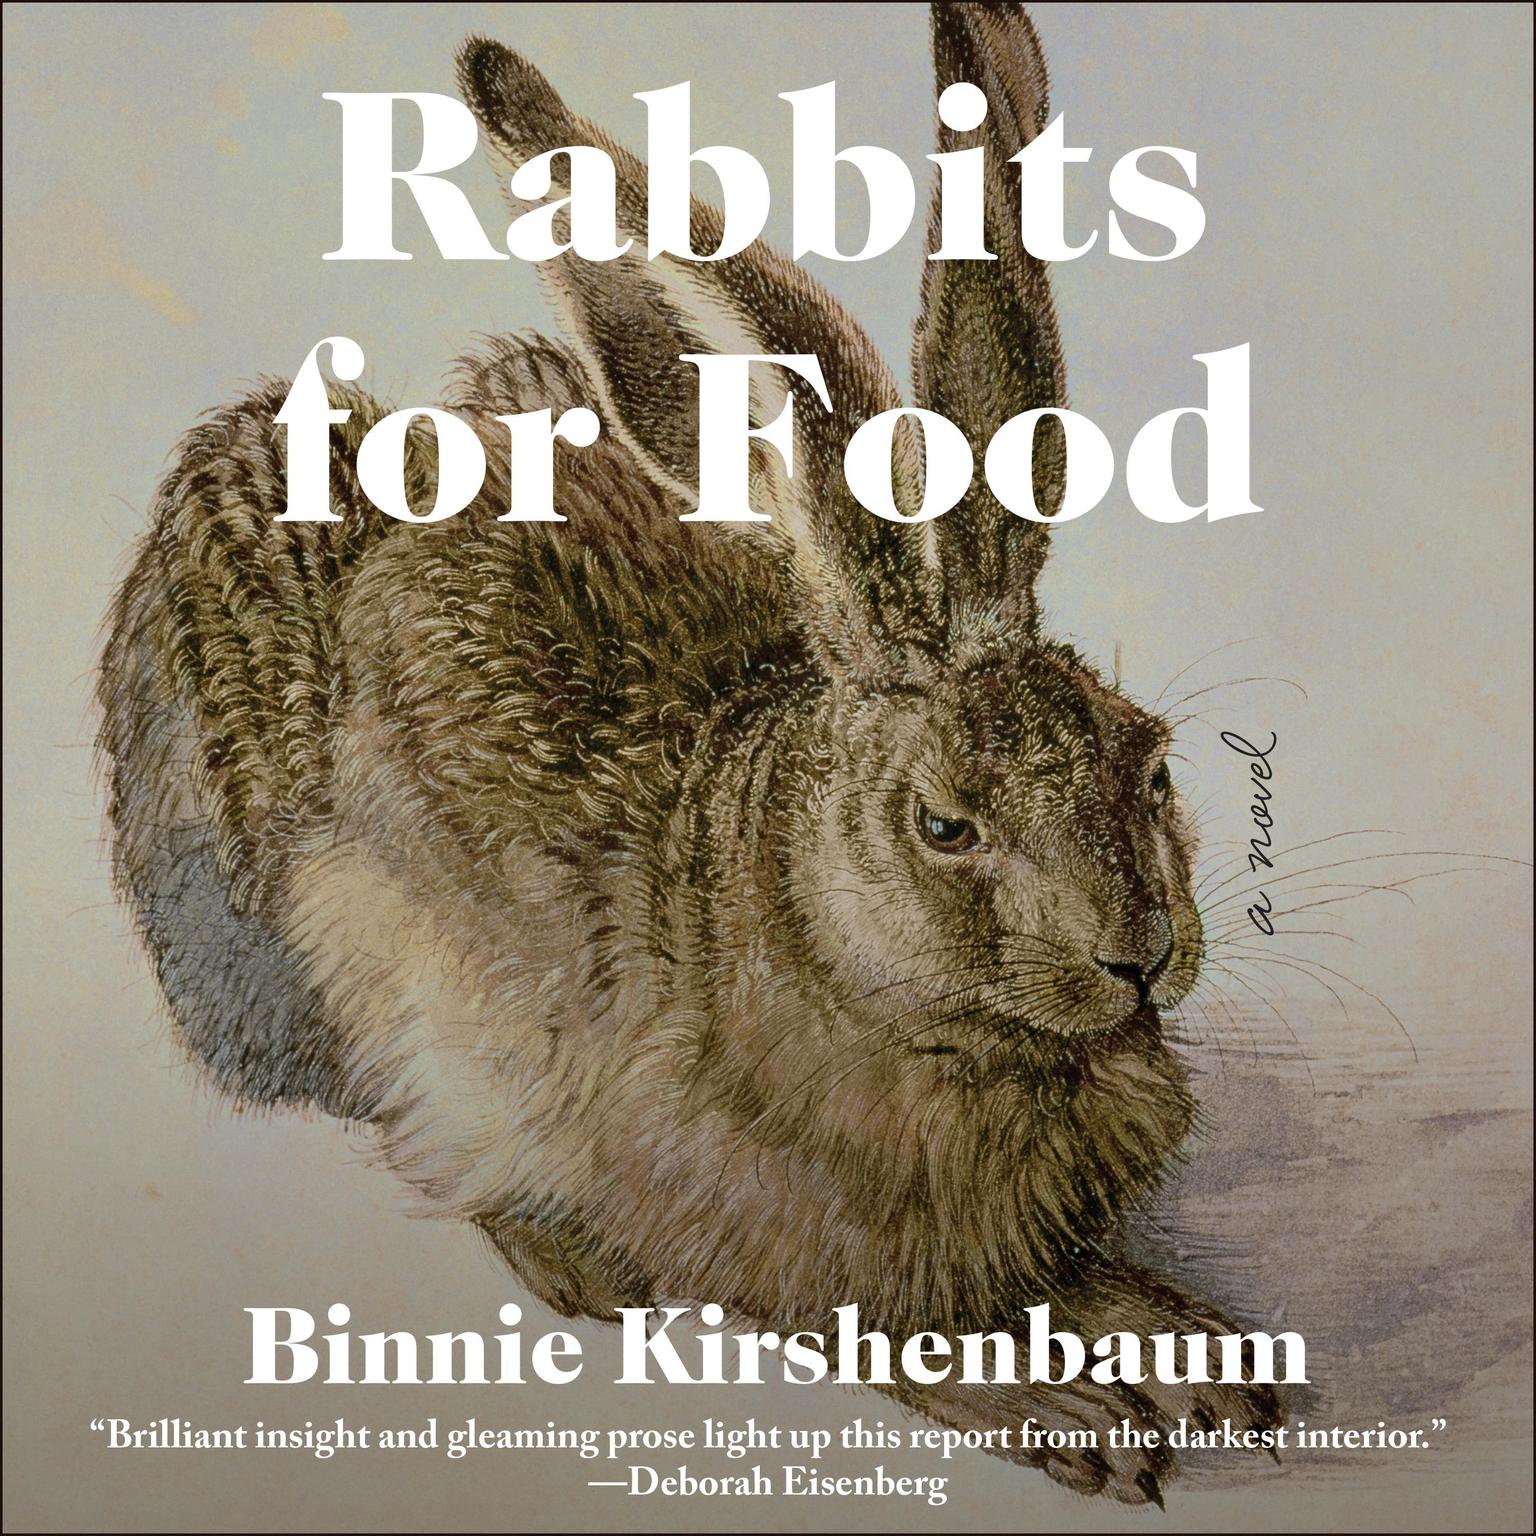 Rabbits For Food Audiobook, by Binnie Kirshenbaum